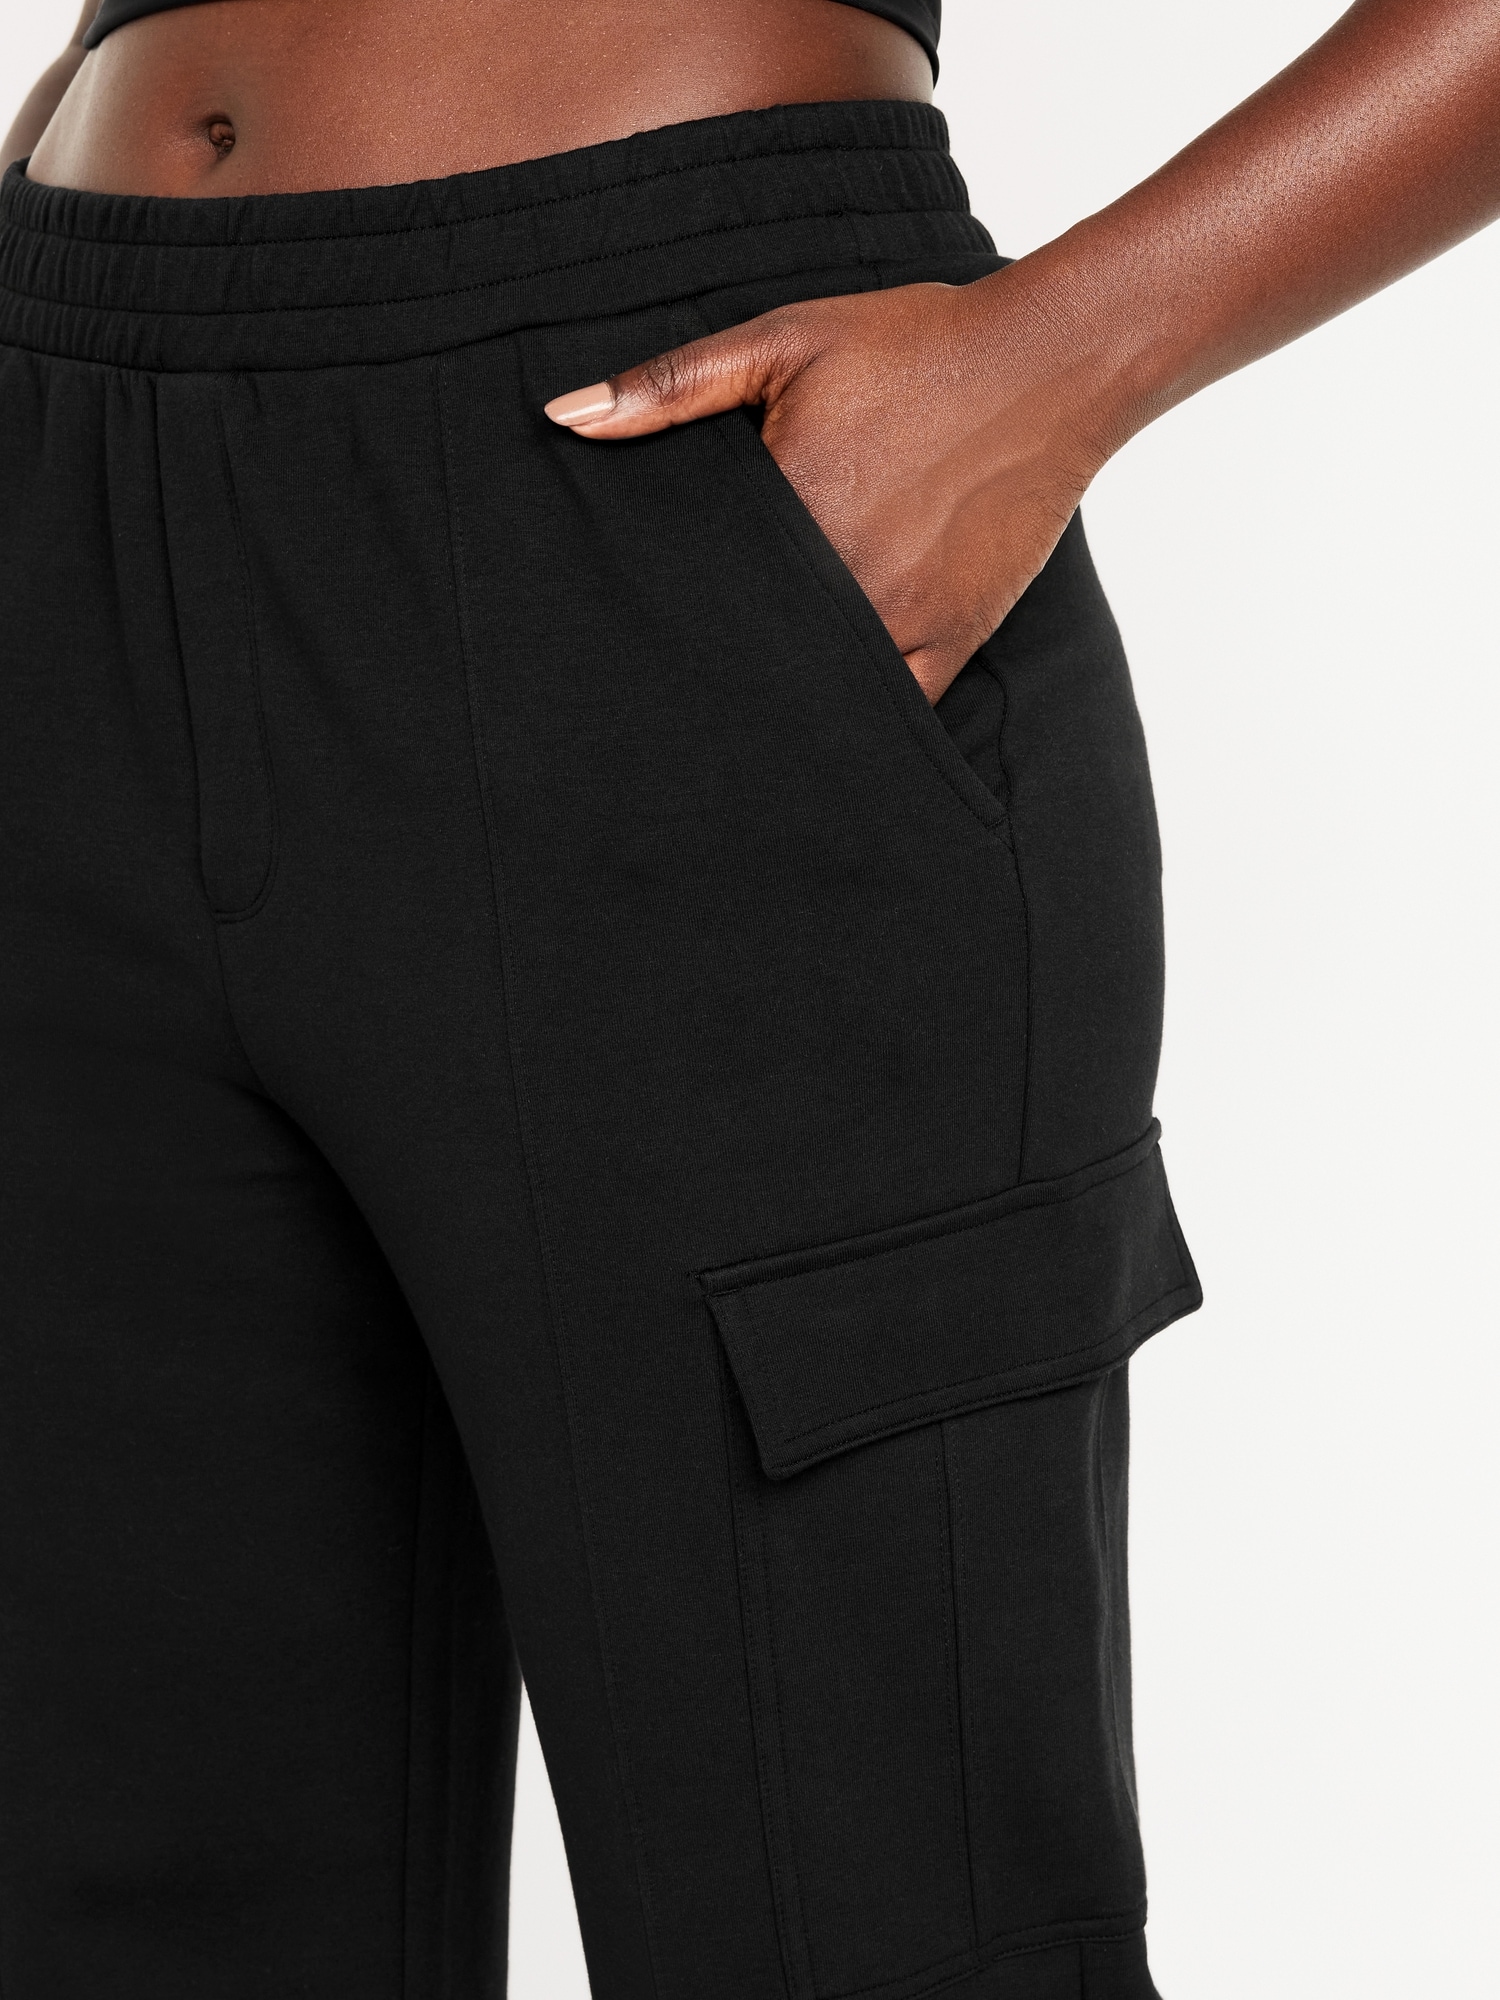 High-Waisted Dynamic Fleece Cargo Trouser Pants for Women